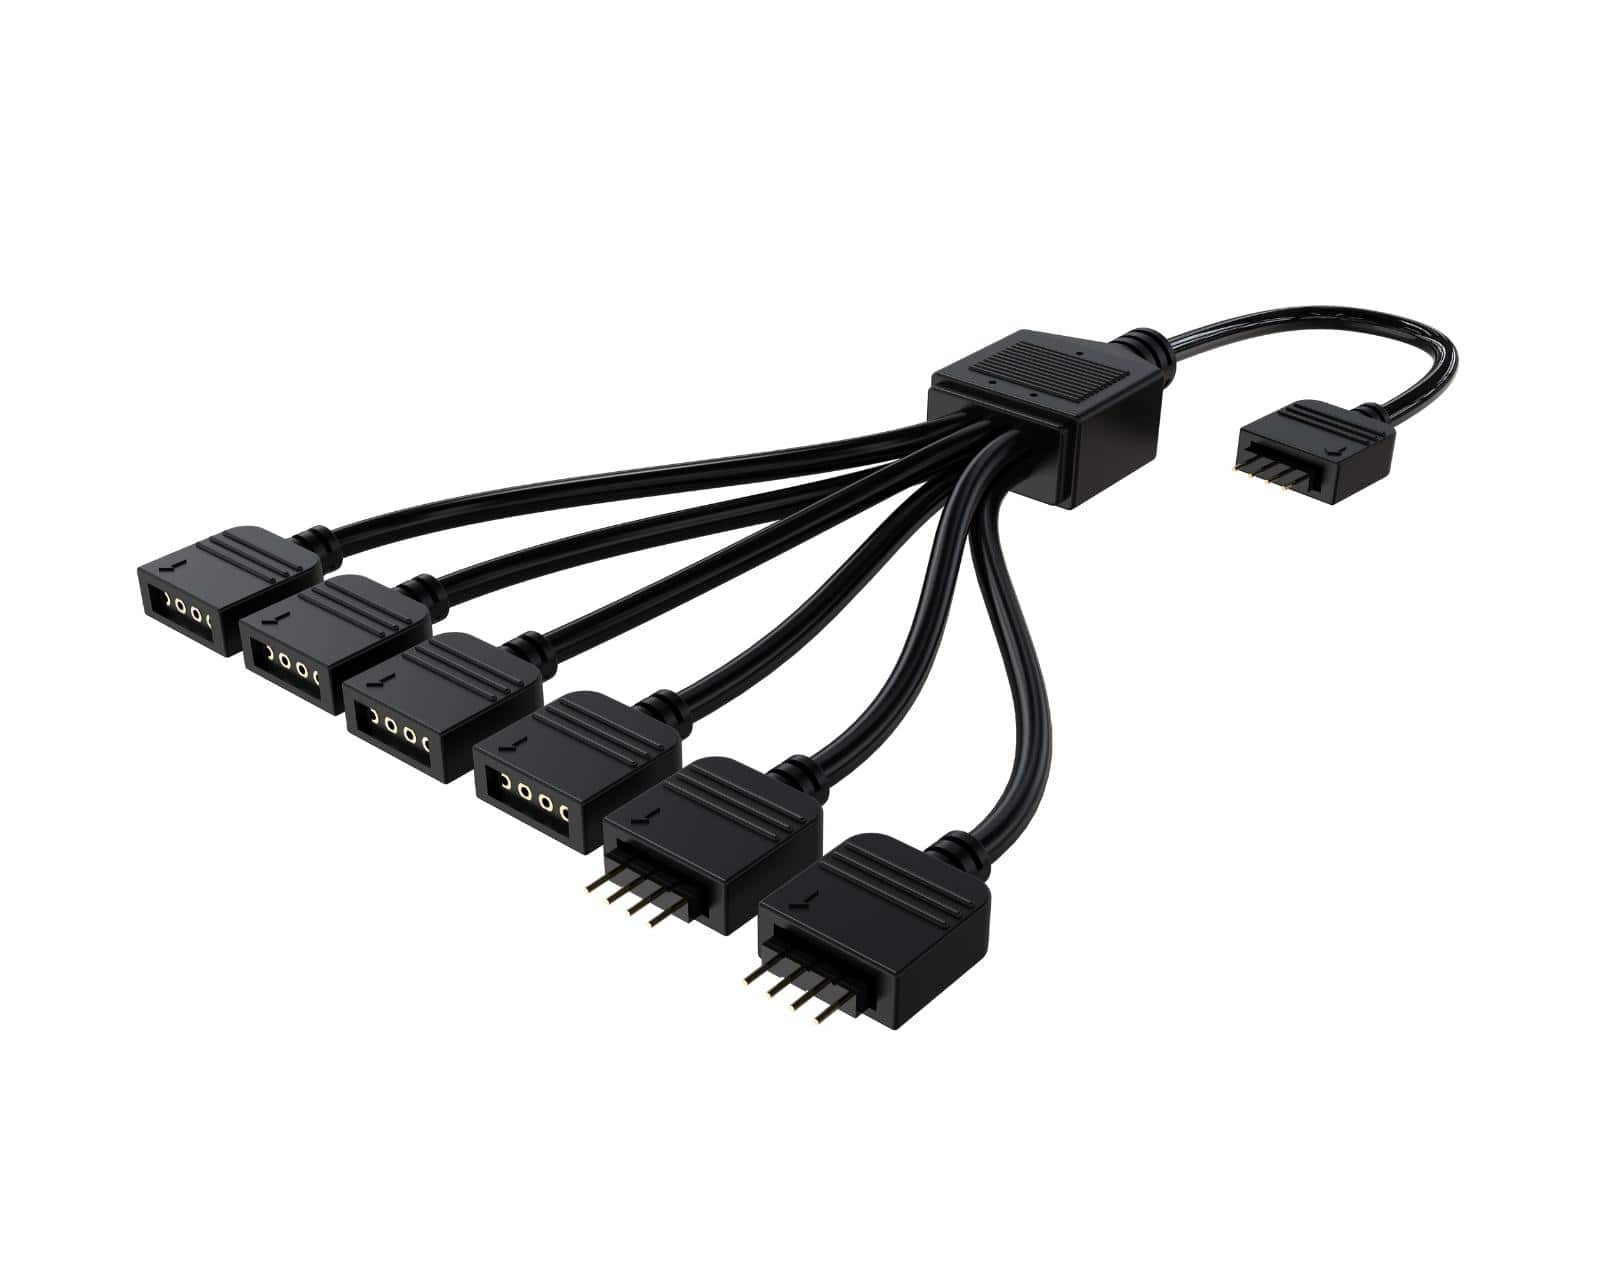 Bykski 5v / 12v Motherboard A-RGB / RGB Header 1x 6 Expansion Cable (B-1P6L-X) - PrimoChill - KEEPING IT COOL